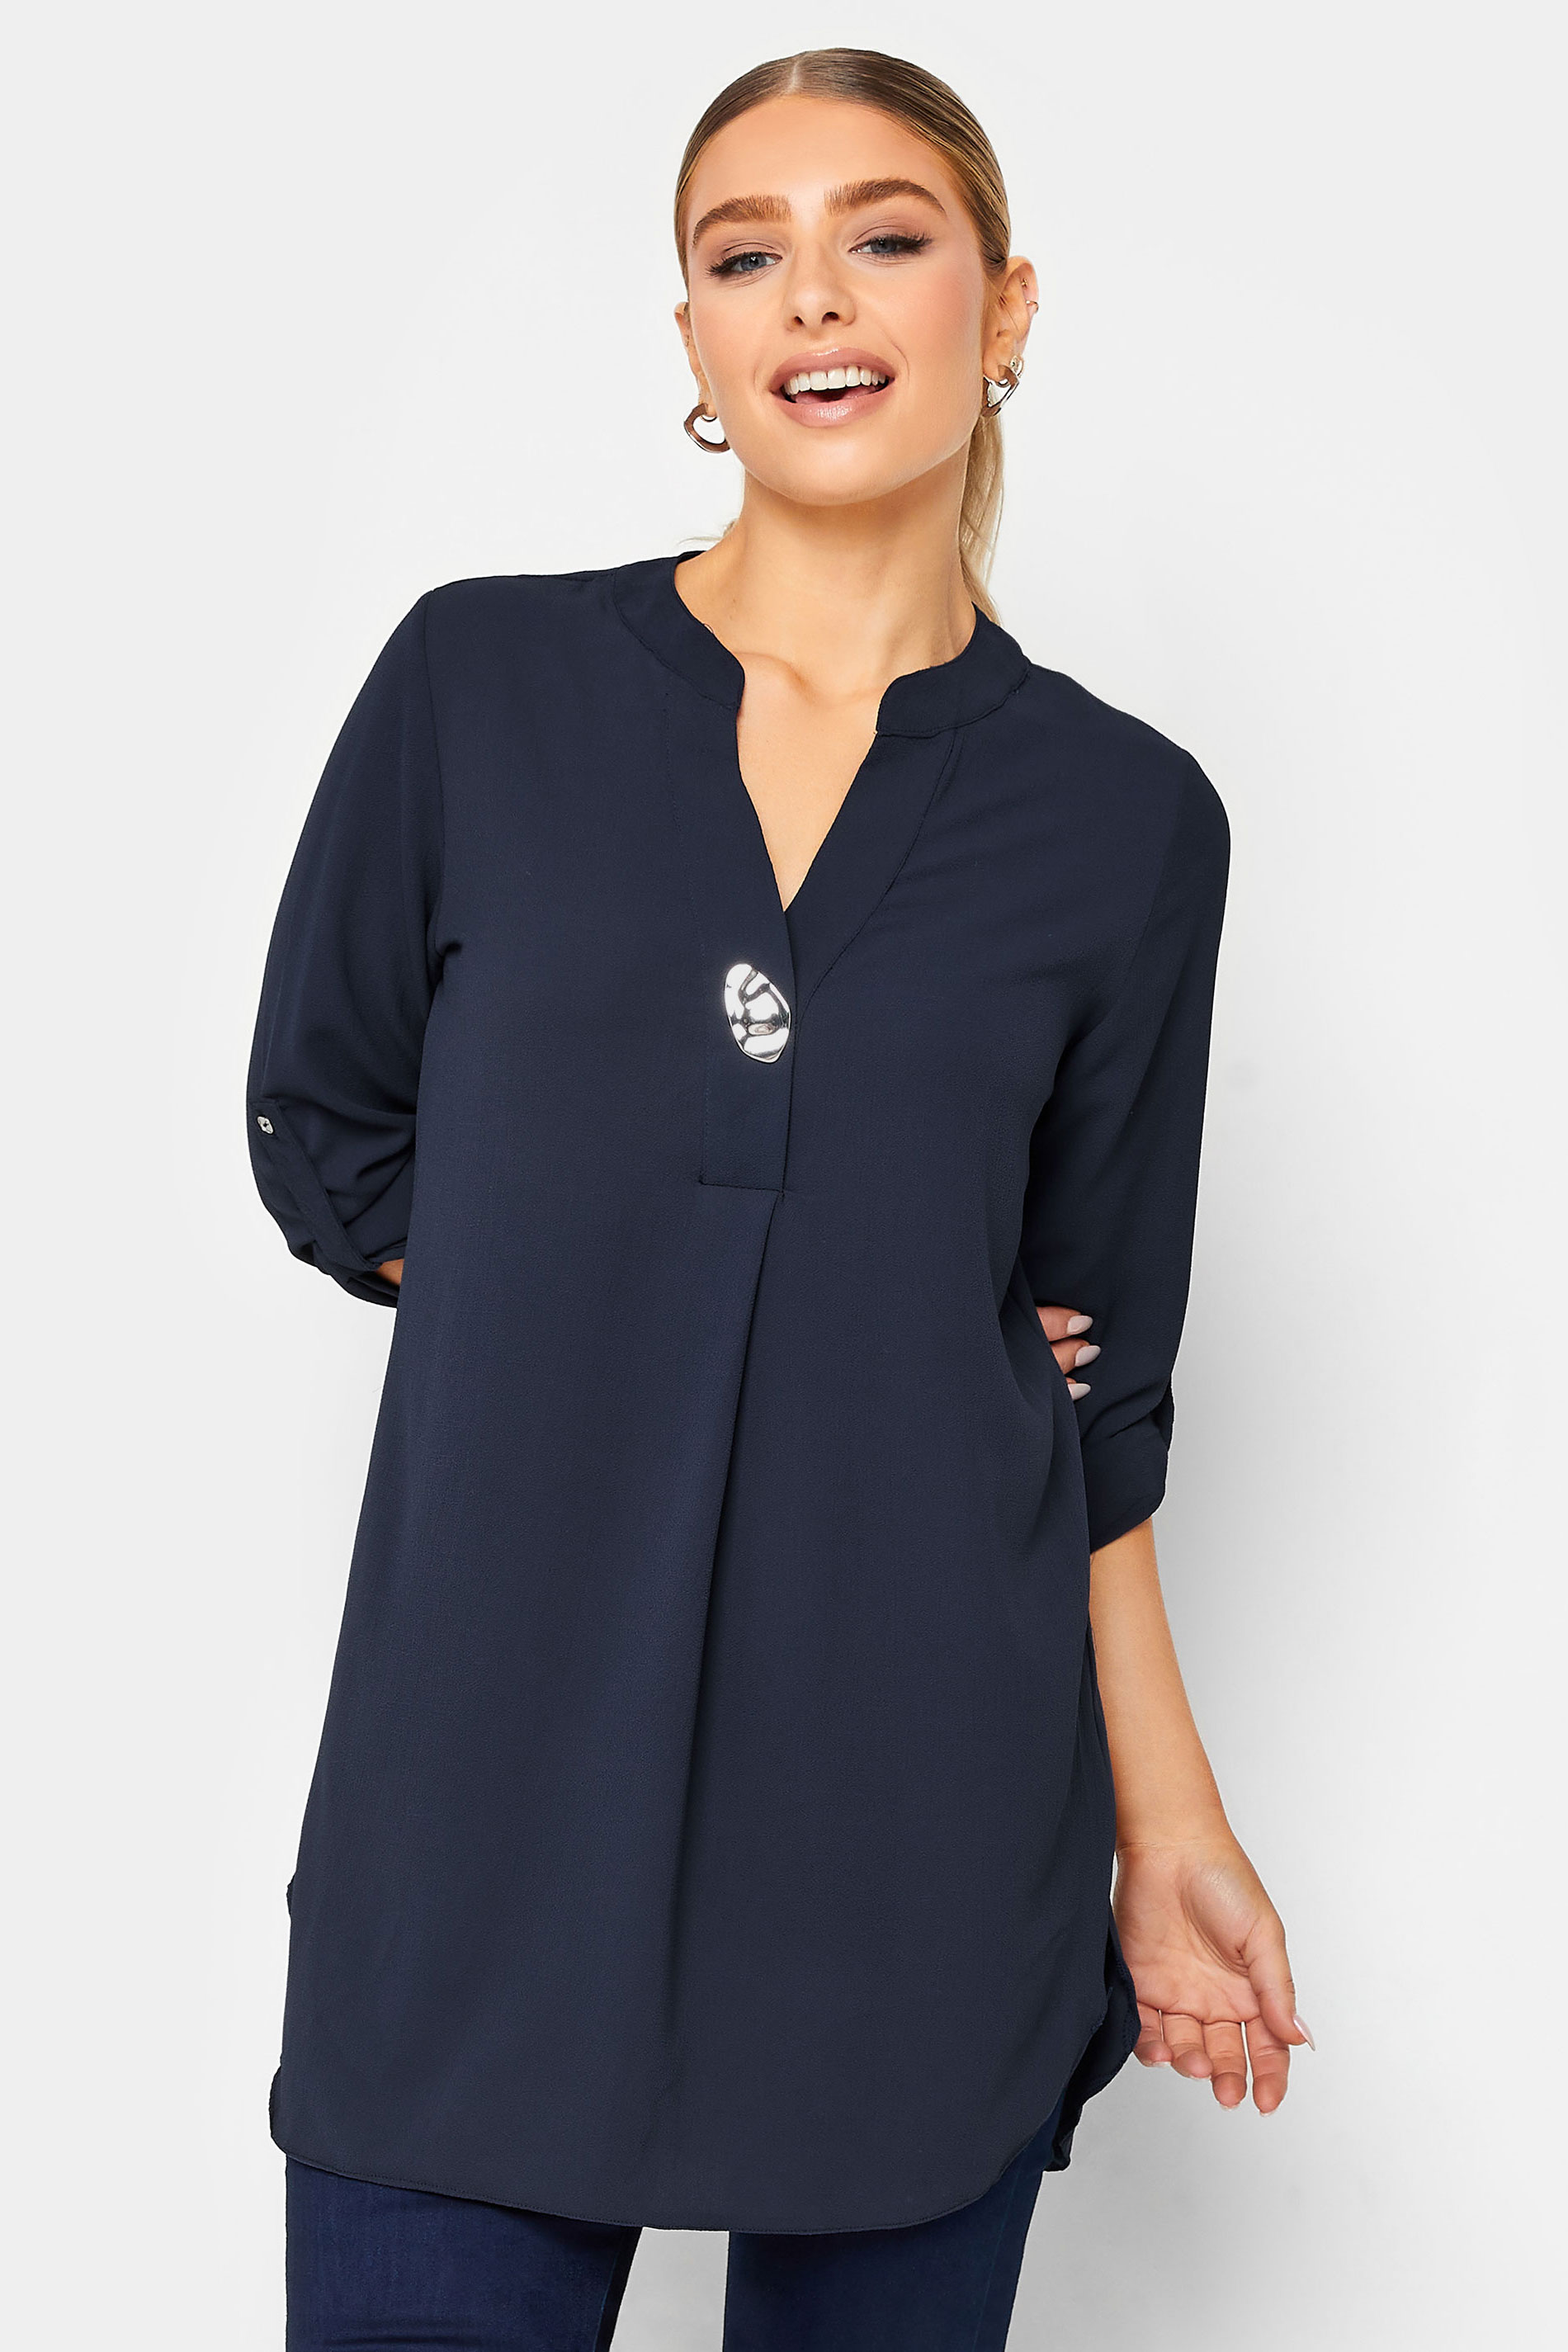 M&Co Navy Blue Long Sleeve Button Blouse | M&Co 1